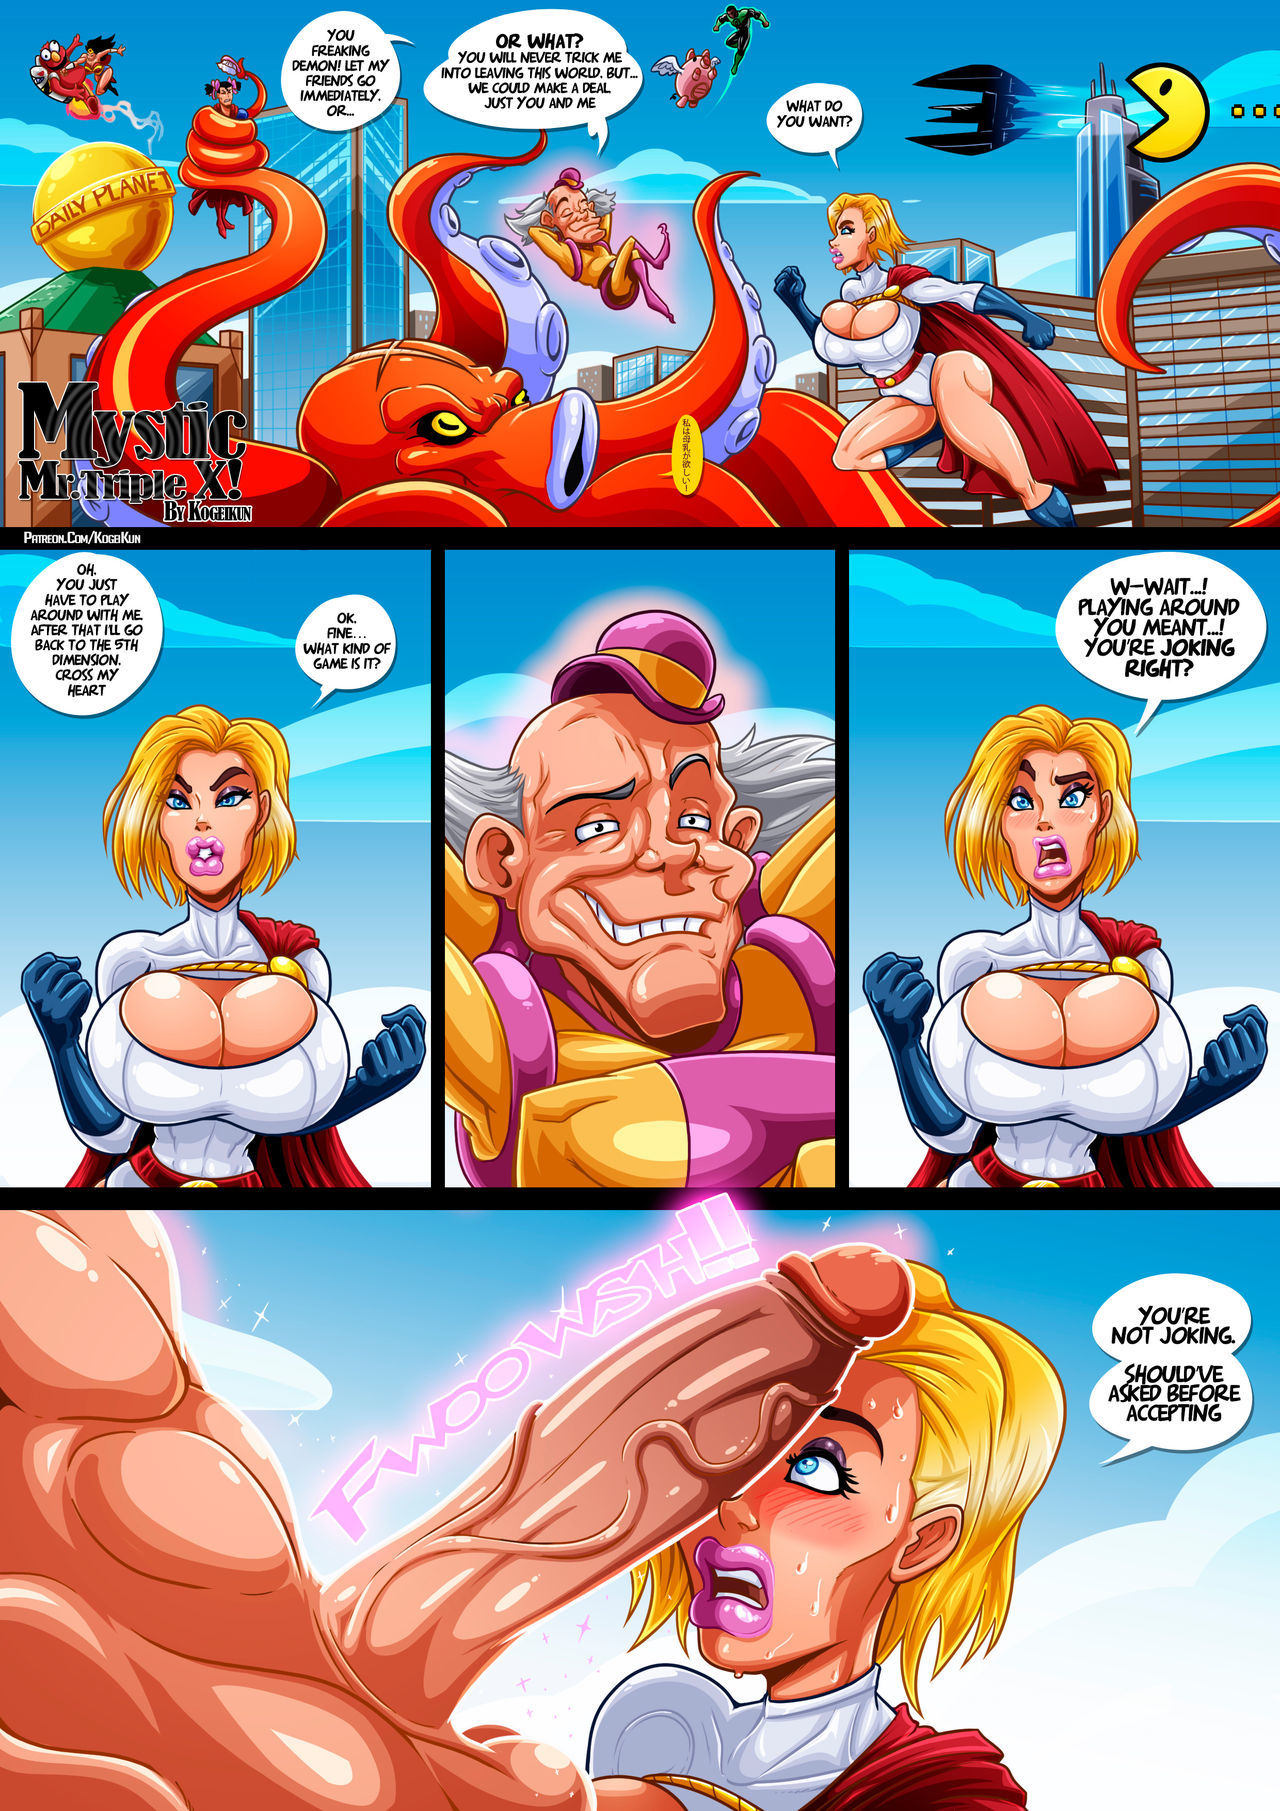 Mystic Mr.Triple X Justice League by Kogeikun page 1